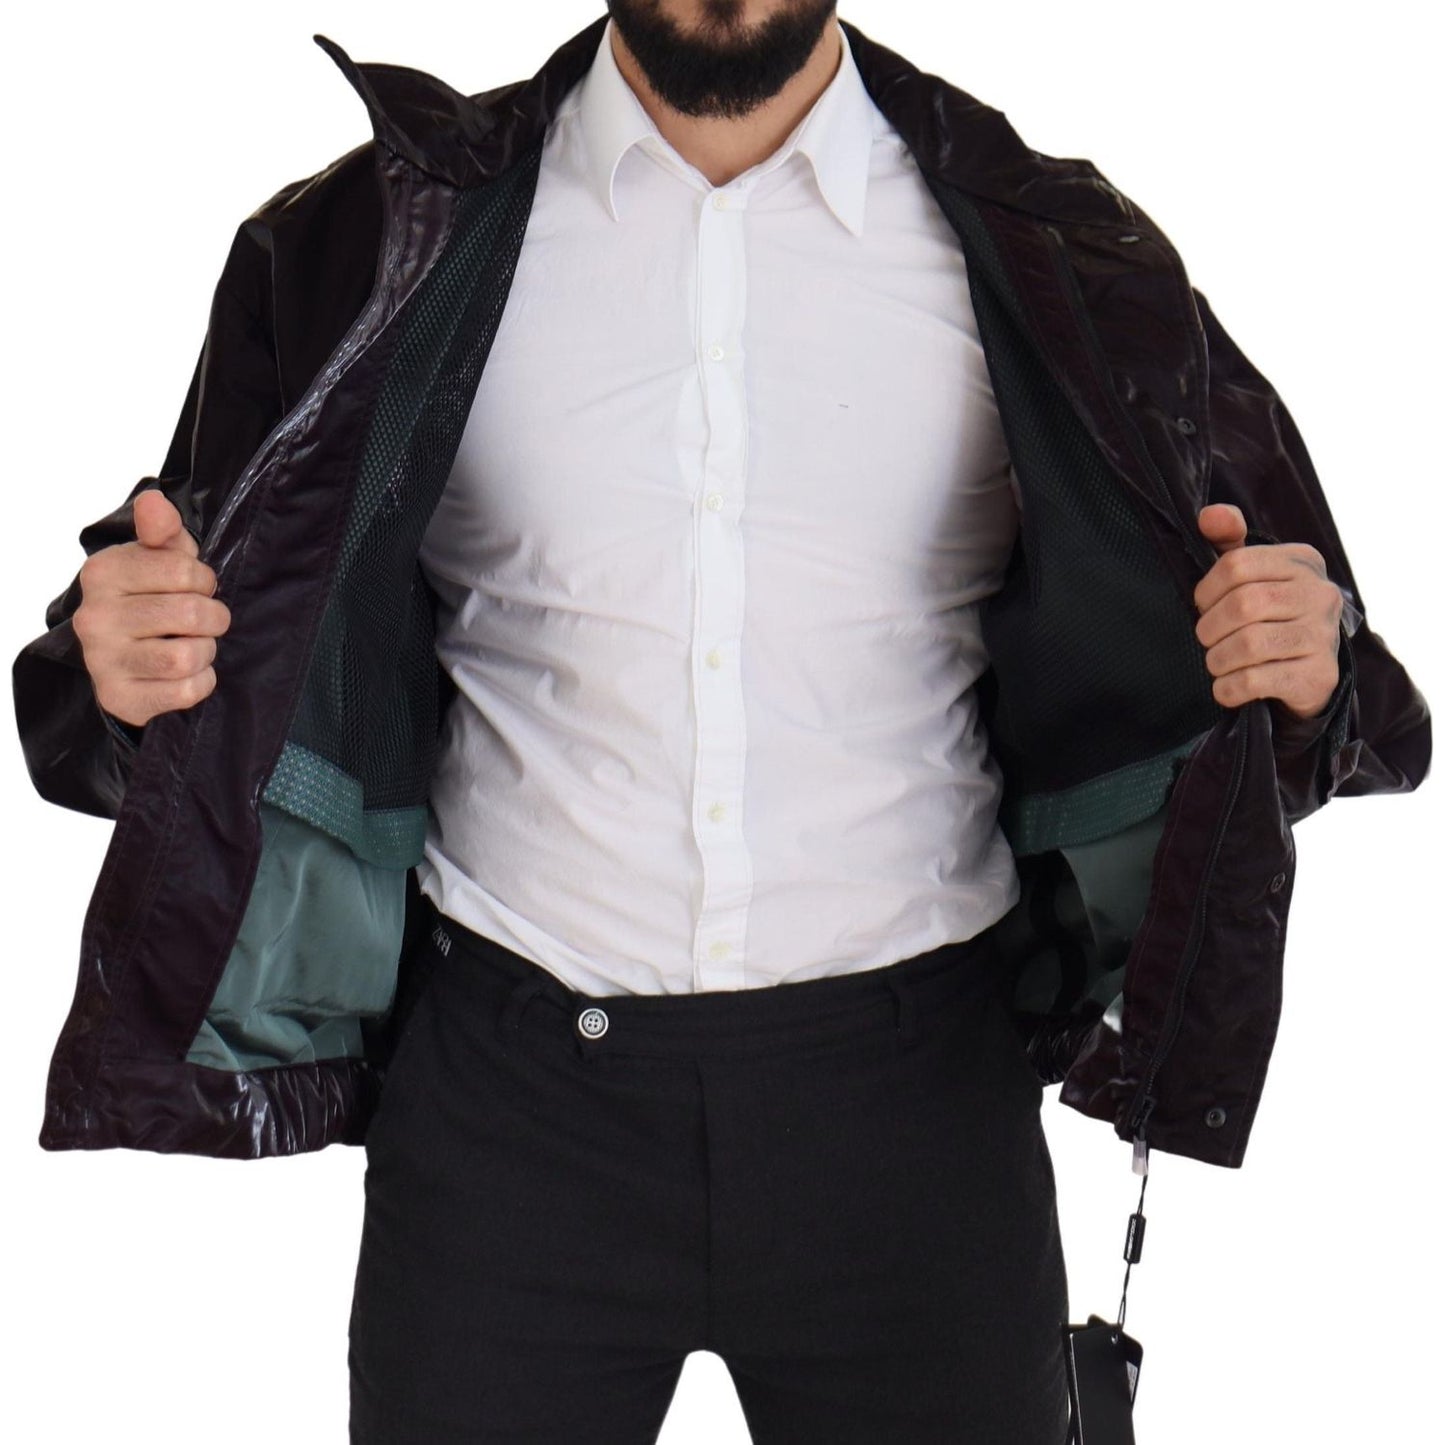 Dolce & Gabbana Elegant Bordeaux Collared Jacket bordeaux-nylon-collared-men-coat-jacket IMG_8281-68d5a799-911.jpg